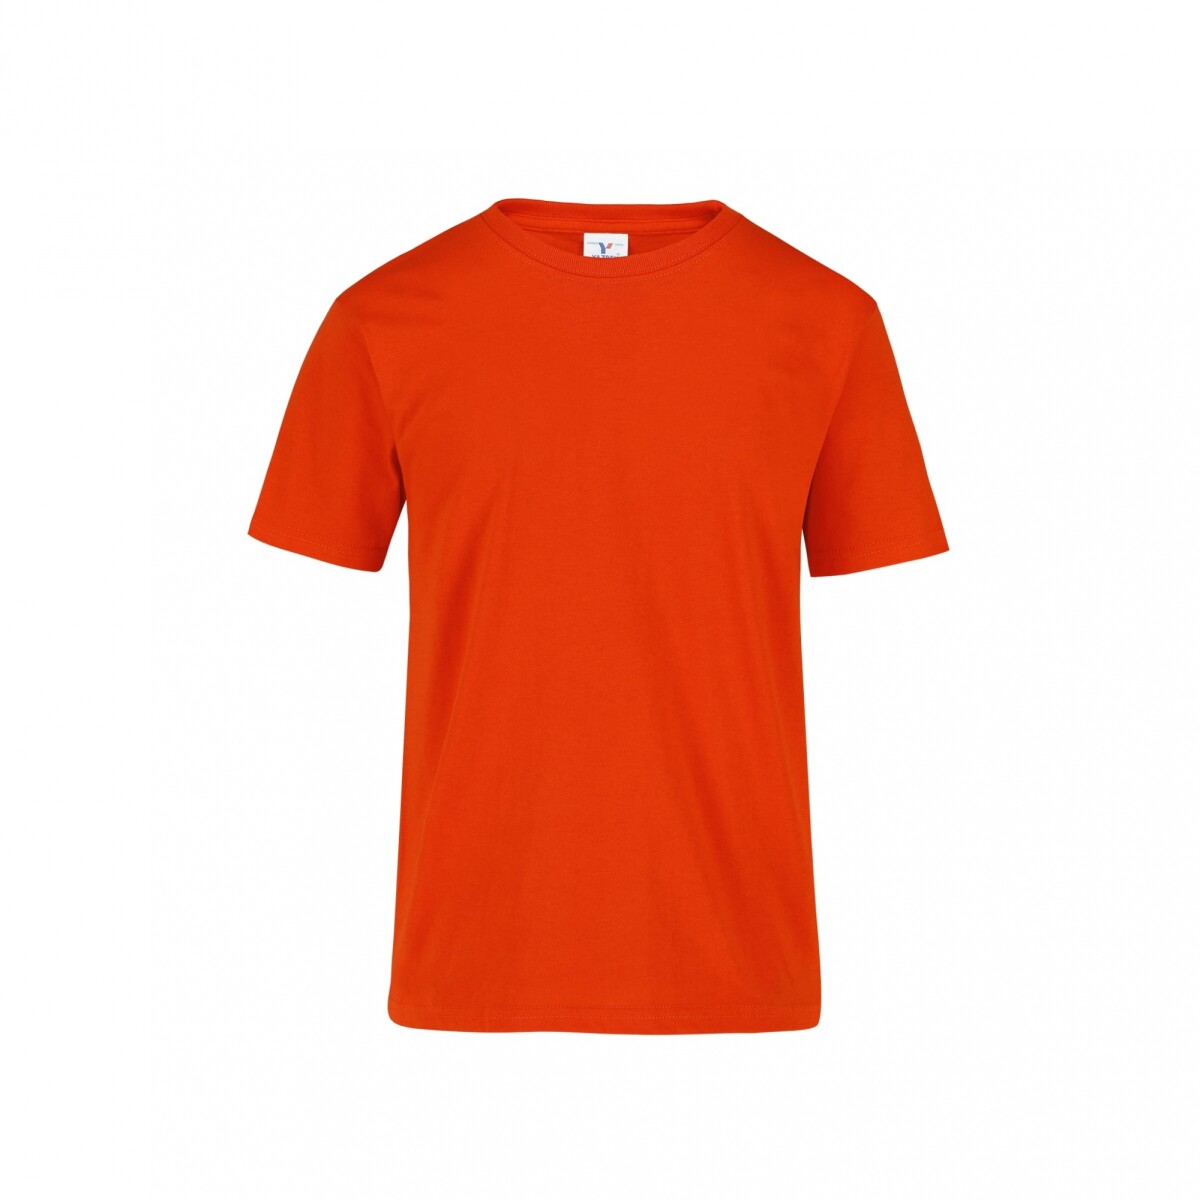 Camiseta a la base niño - naranja 